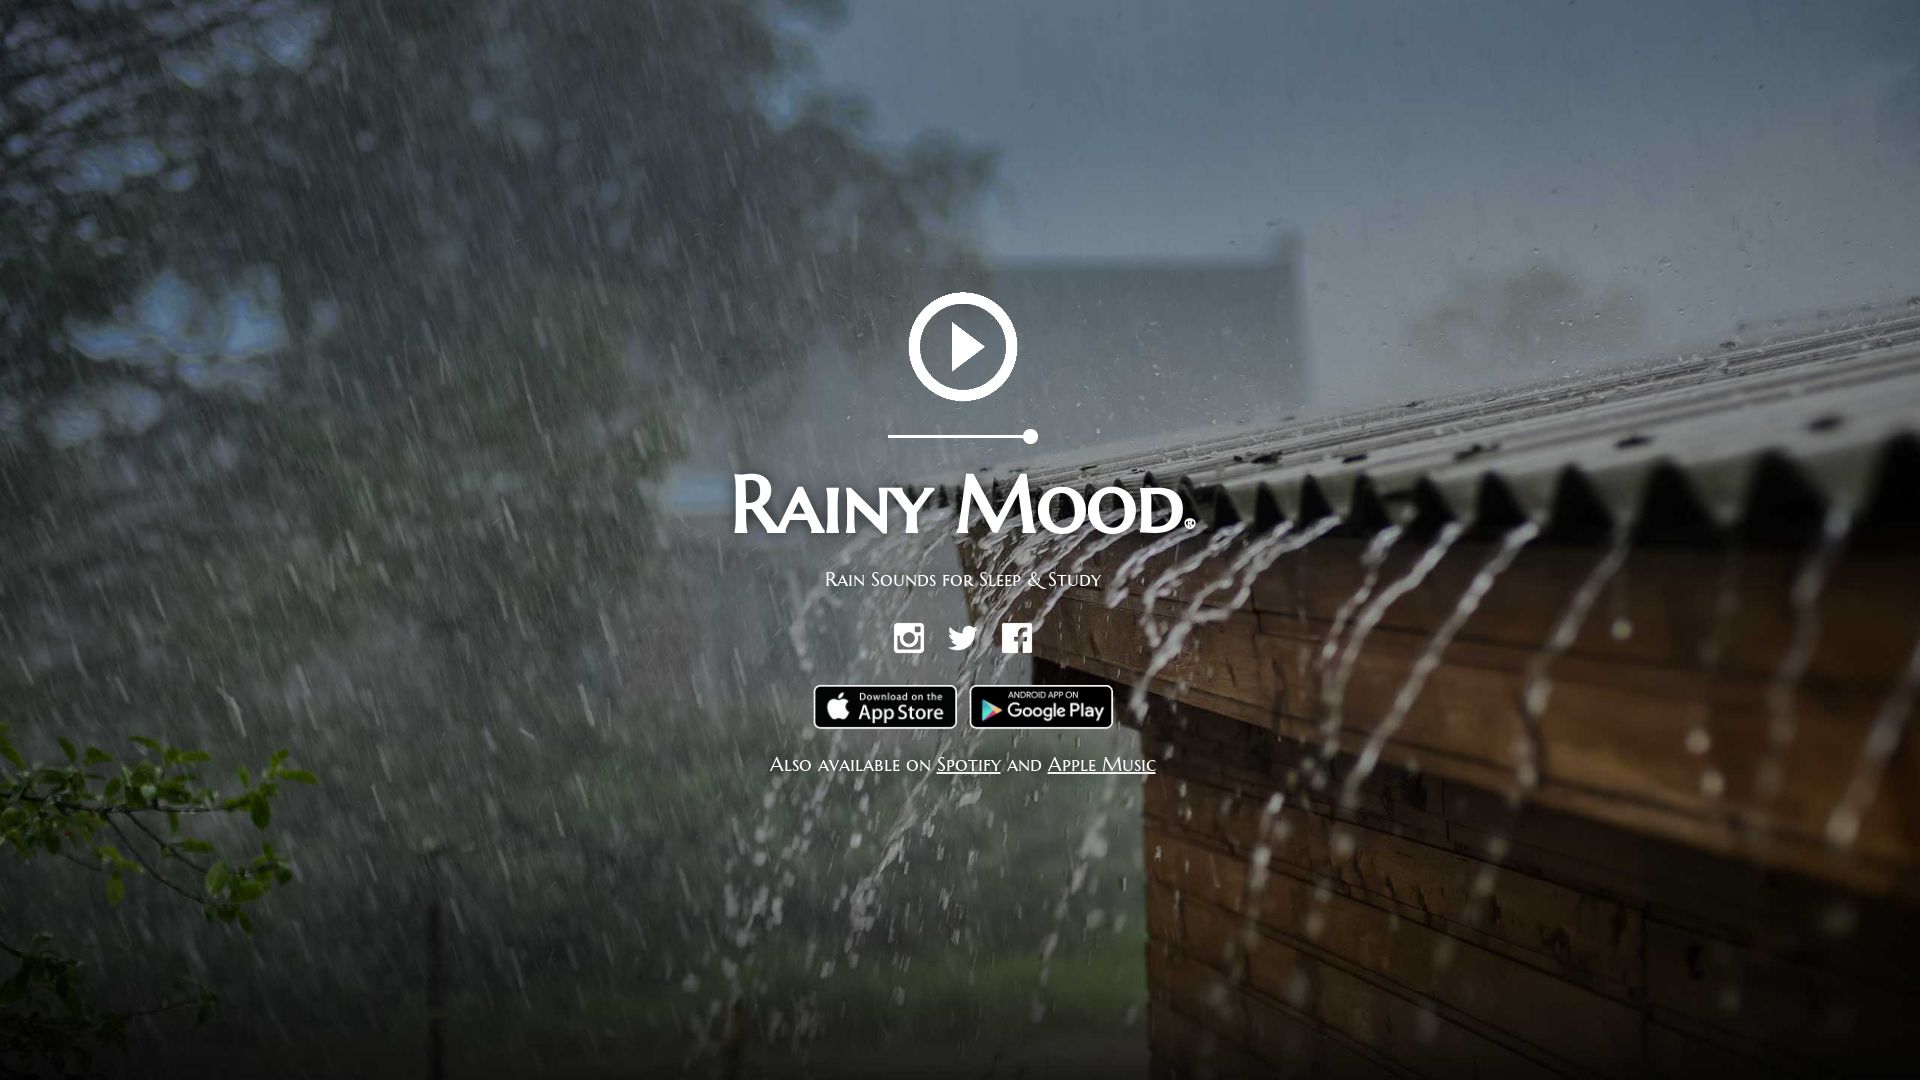 вебсайт rainymood.com Є   ONLINE